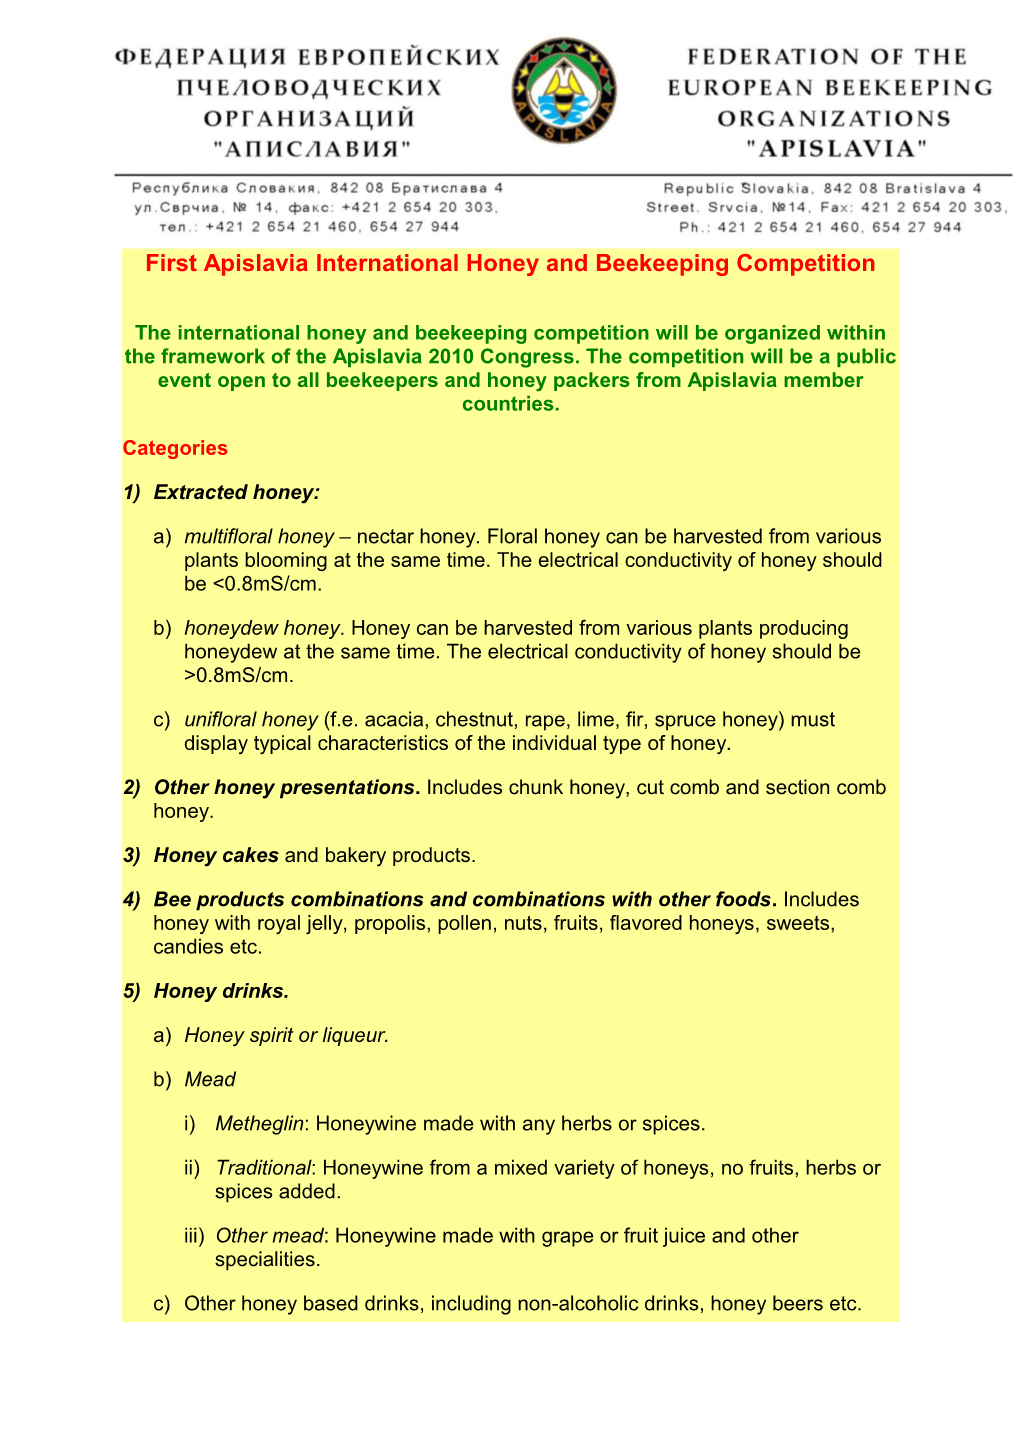 First Apislavia International Honey and Beekeeping Competition